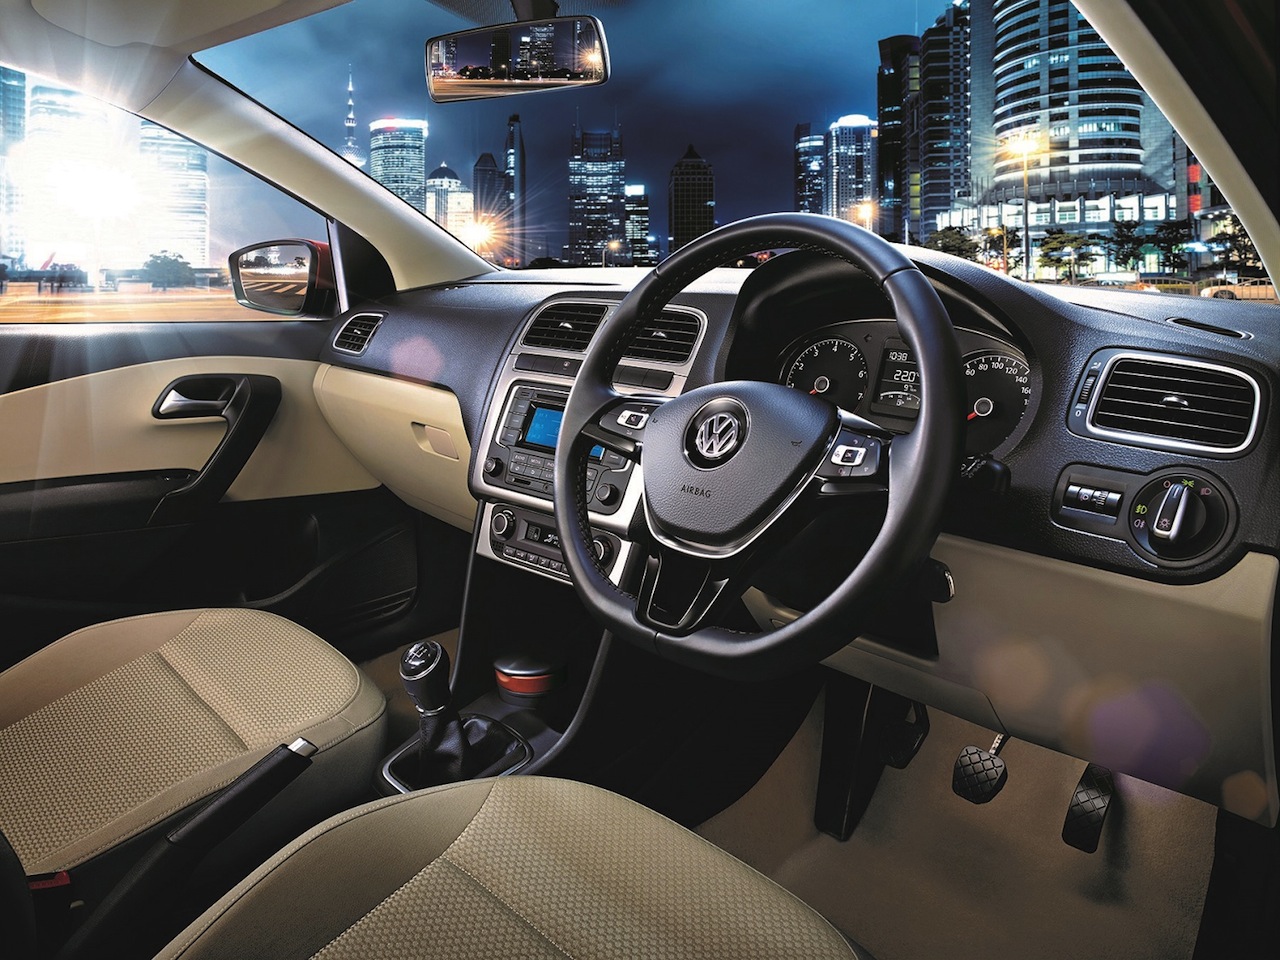 2015 VW Polo India interior